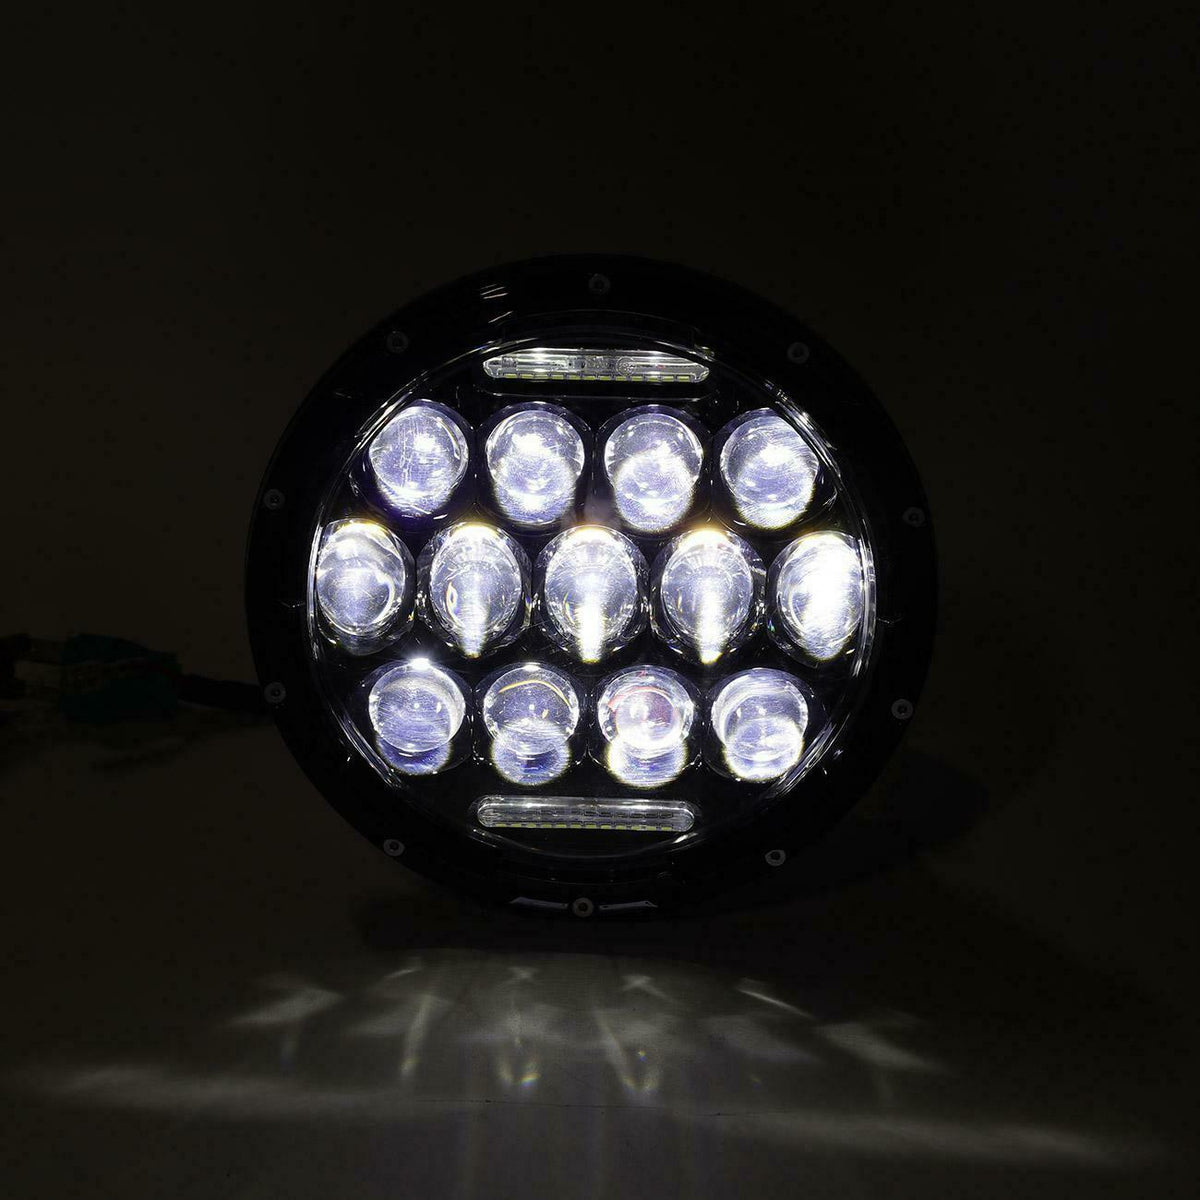 7&quot; LED Headlights + 4&quot; Fog Light Combo Kit For Jeep Wrangler JK 2007-2018 Head &amp; Fog Lights Sets 